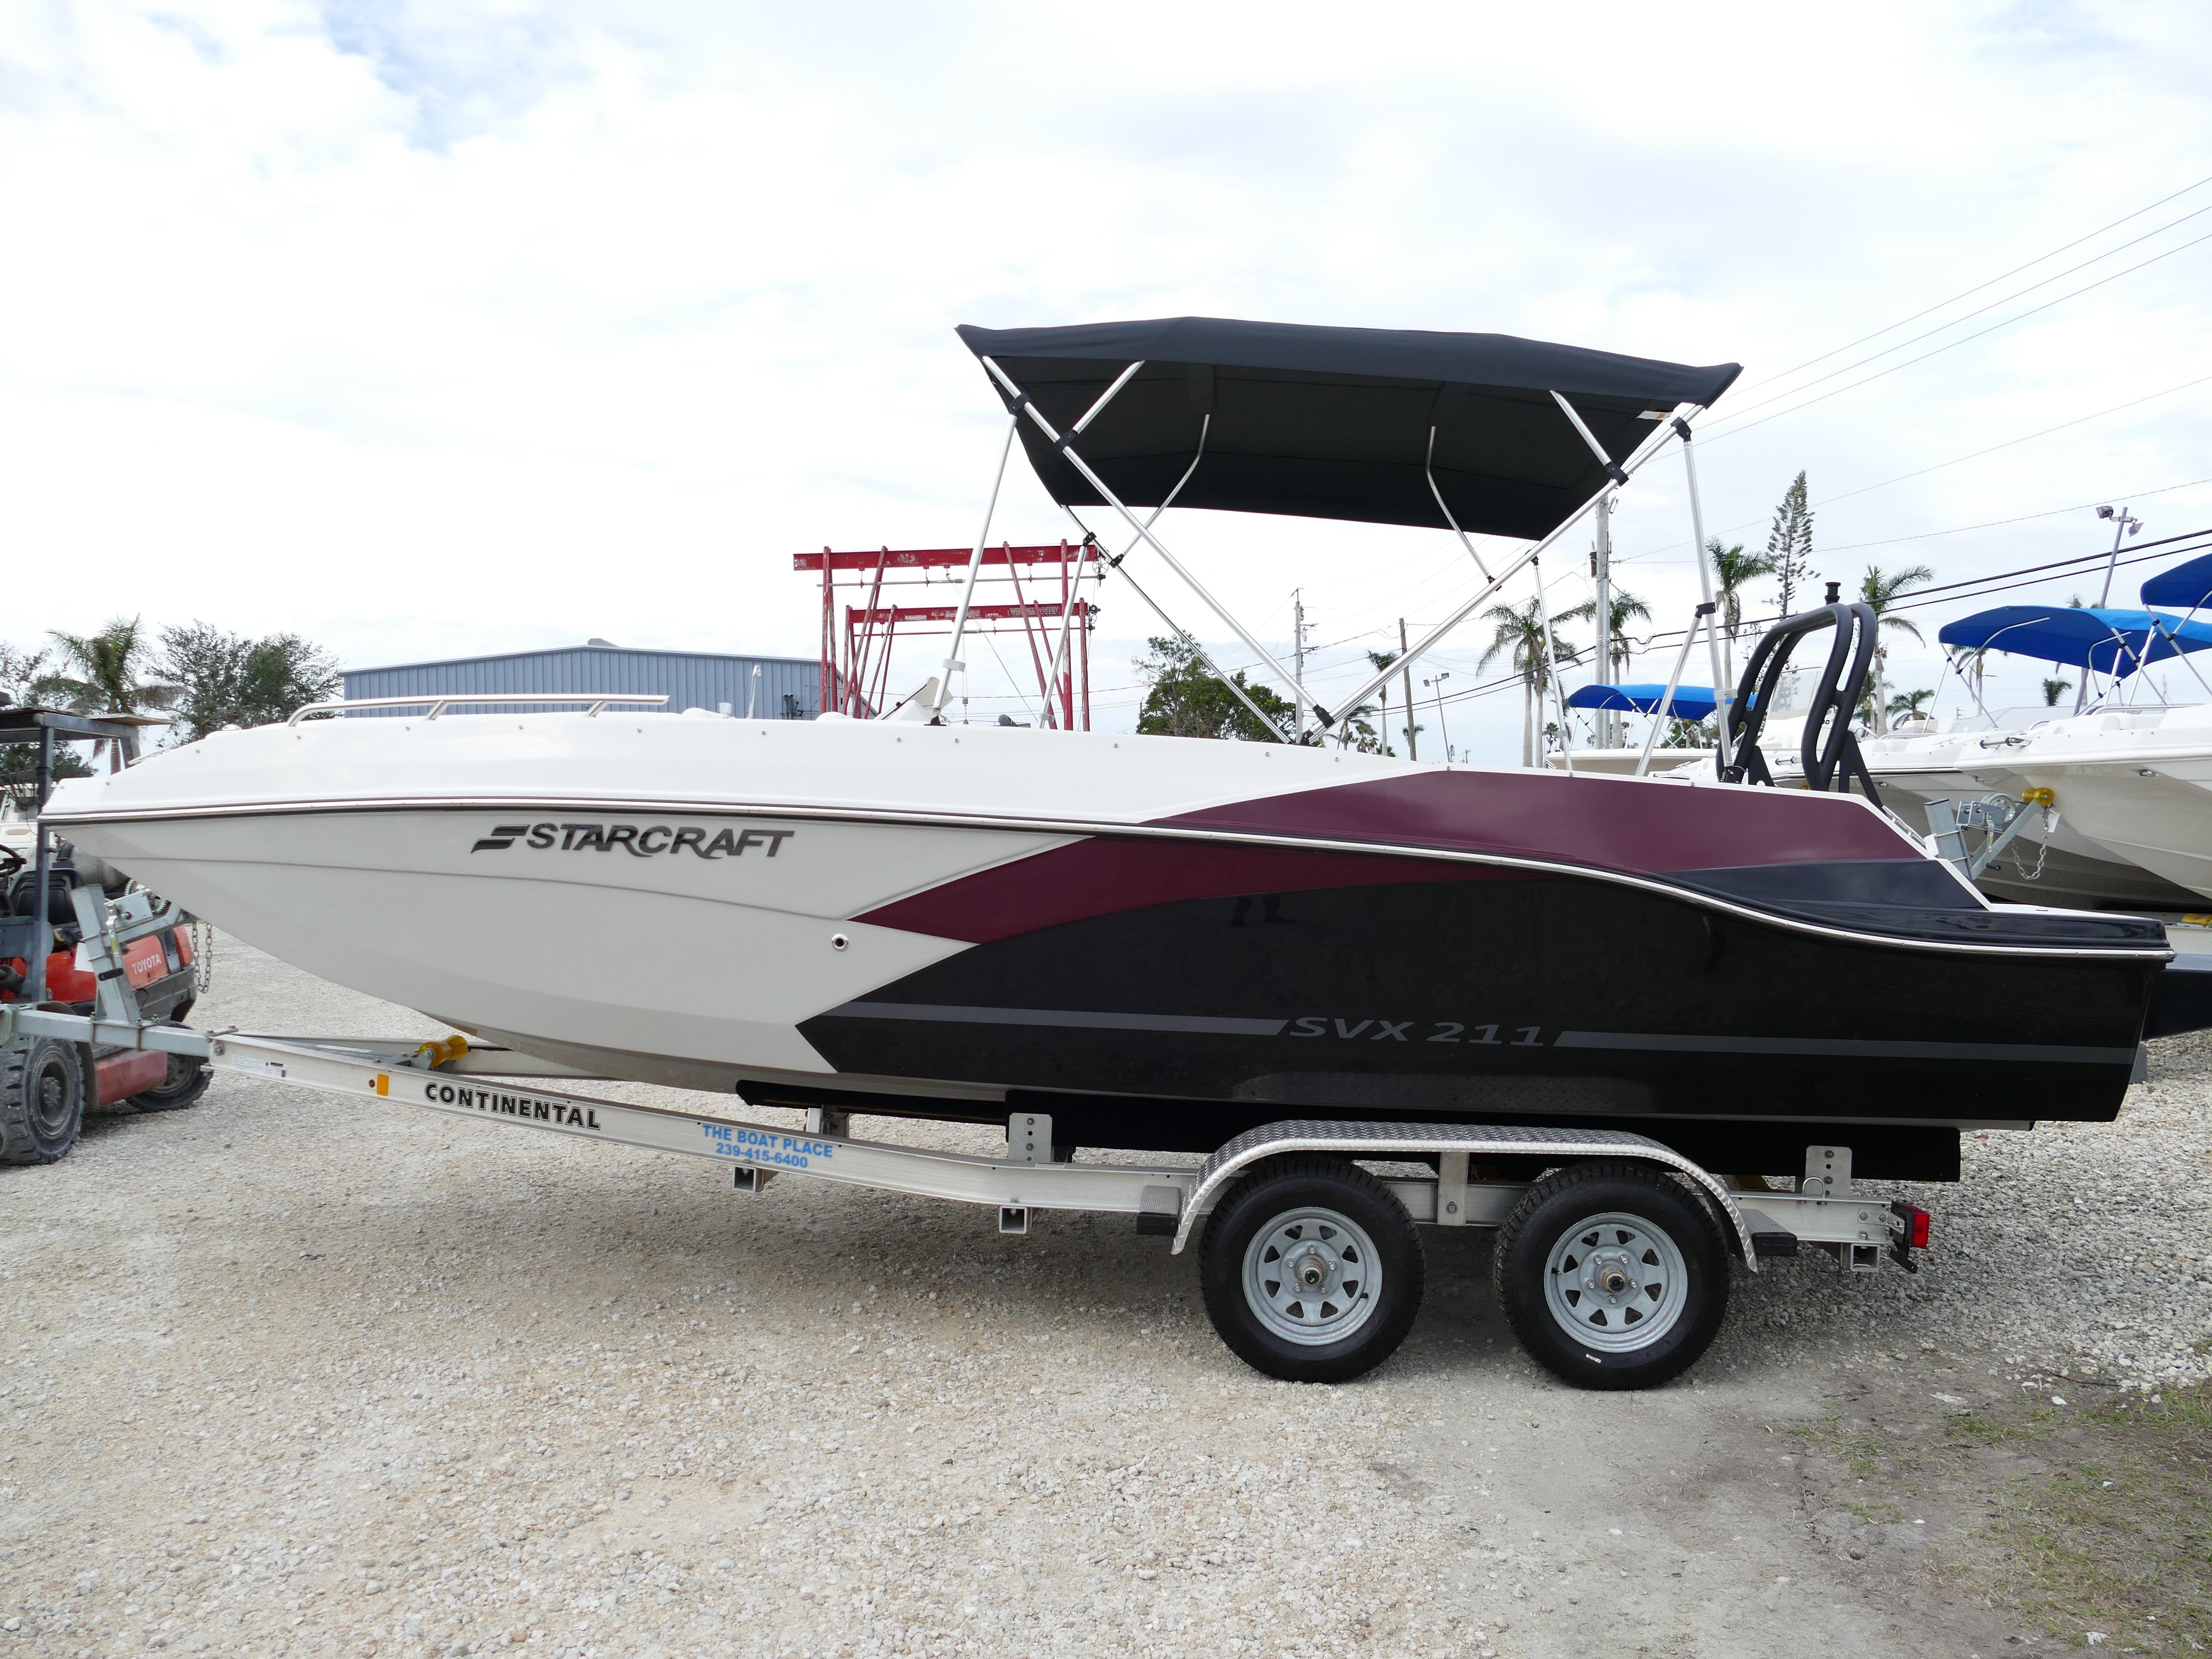 New 2023 Starcraft Svx 211 Ob 33908 Fort Myers Boat Trader 8594